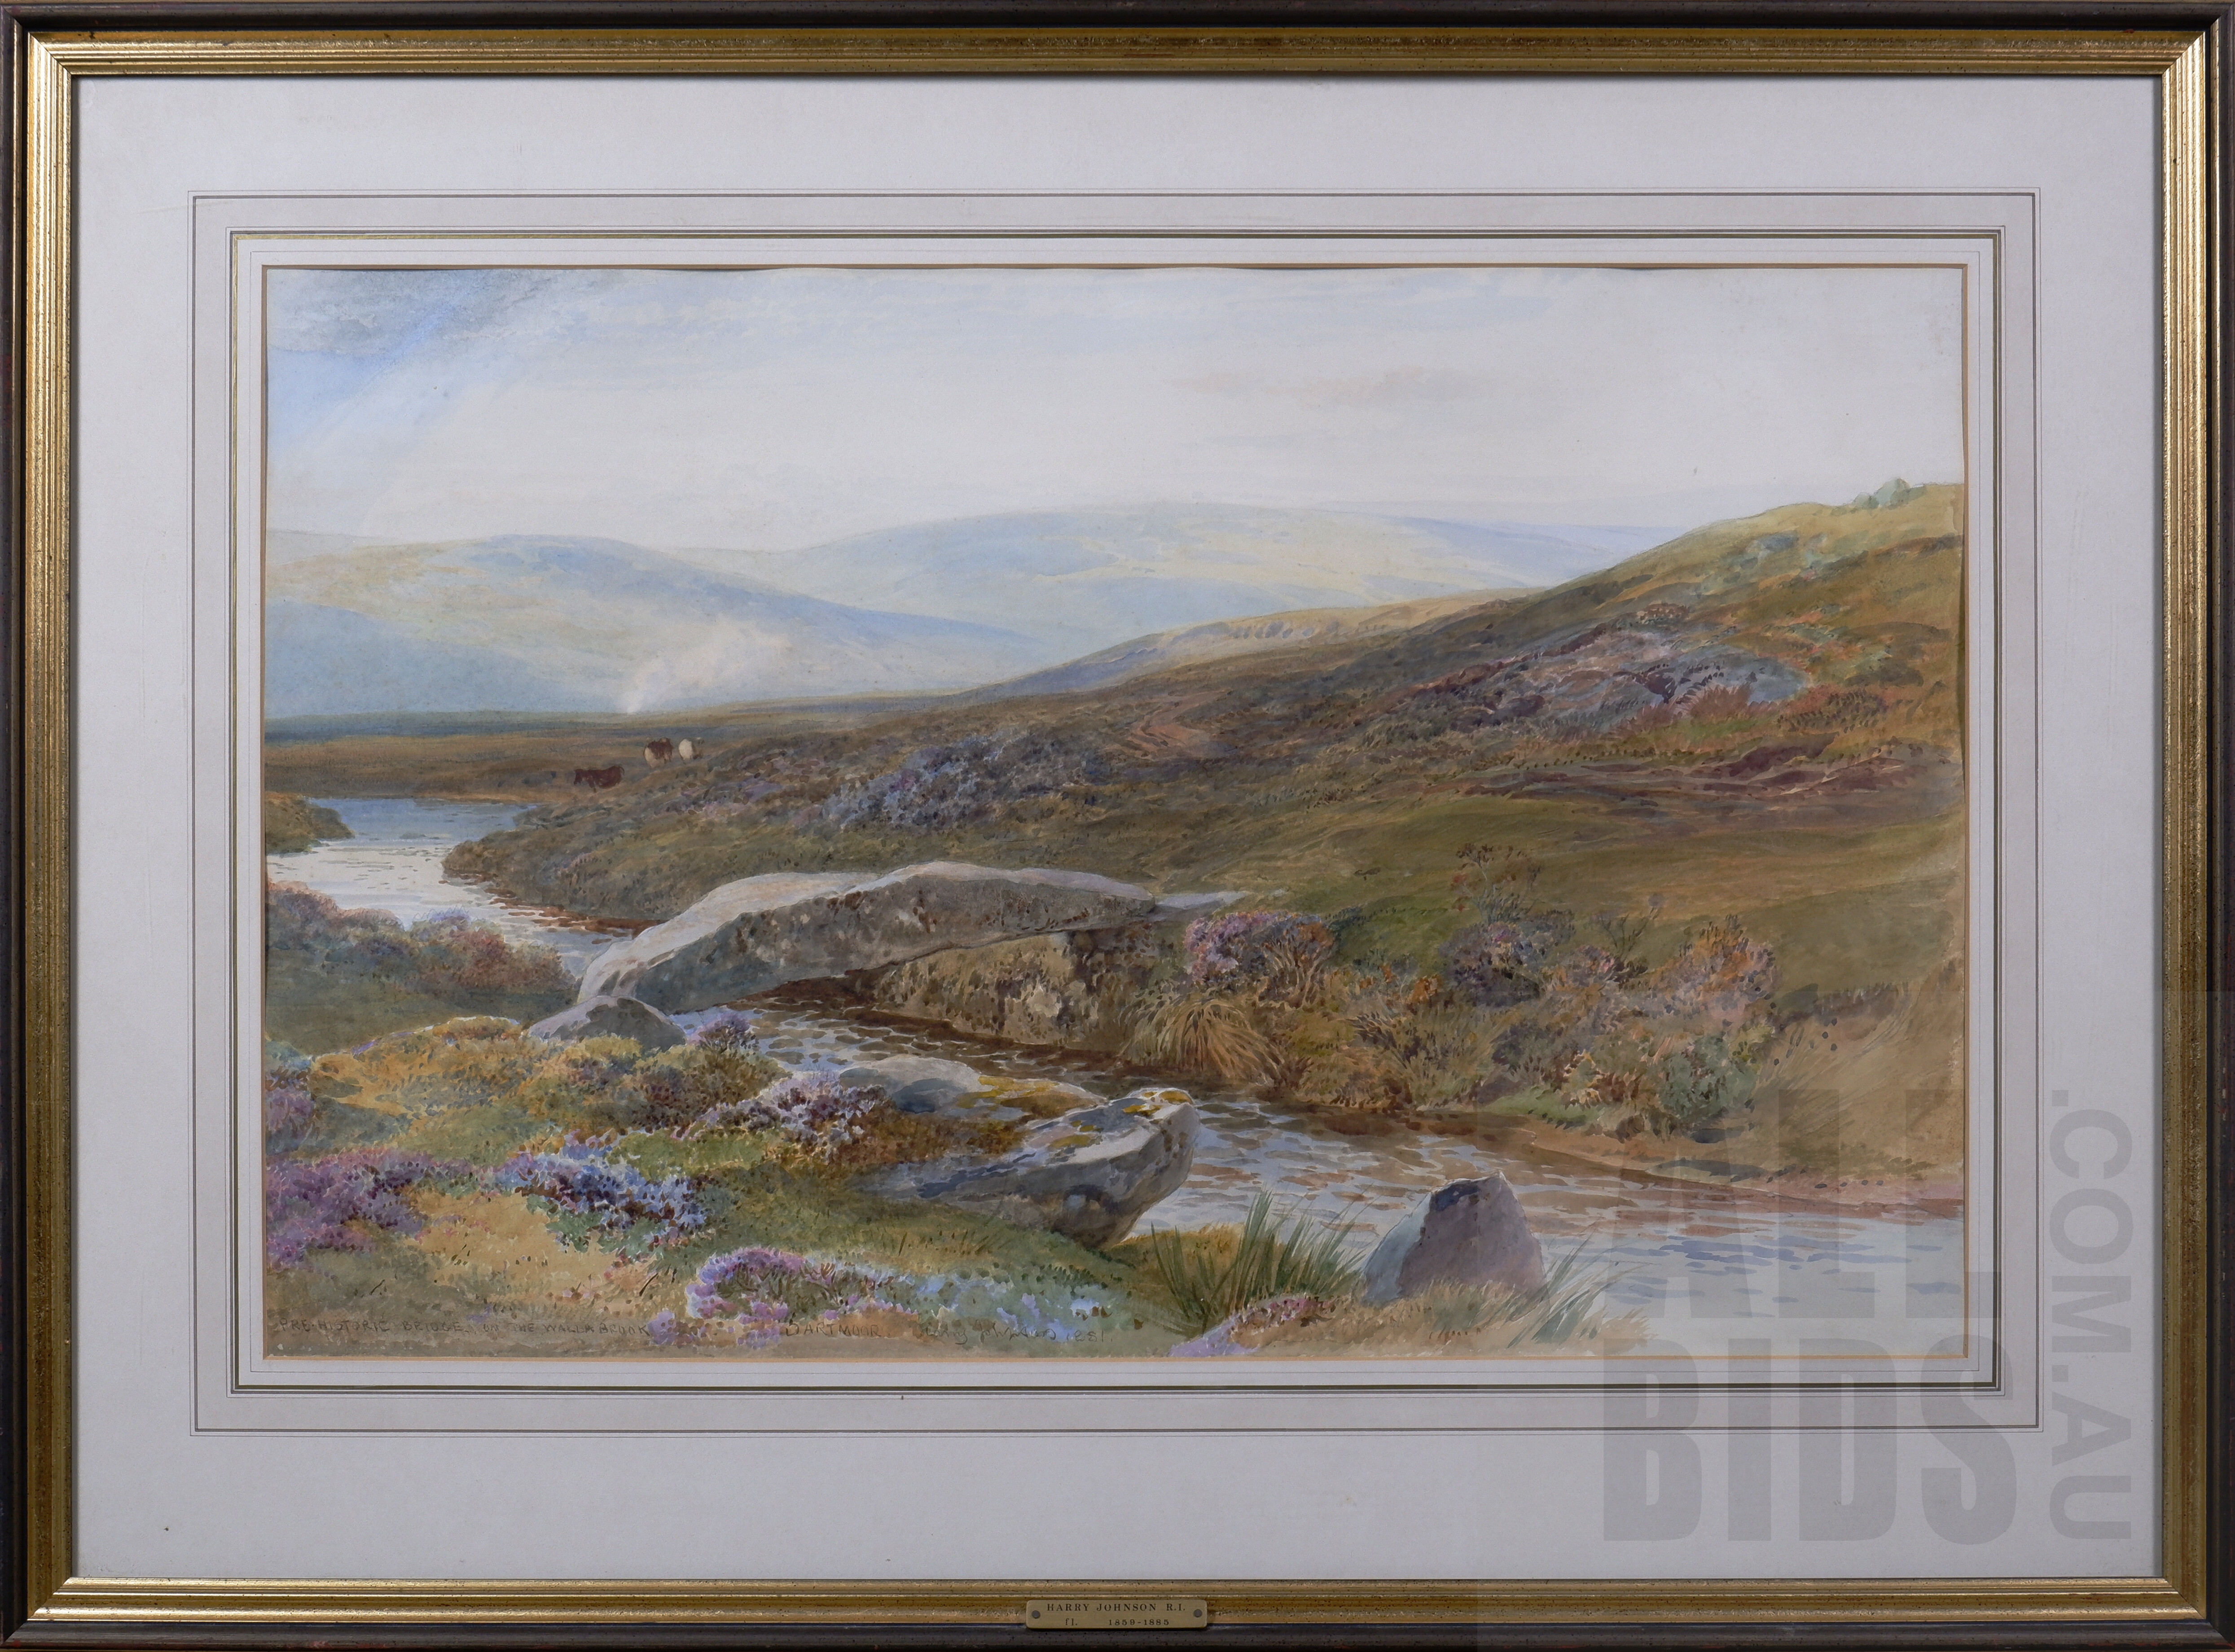 'Harry Johnson (British, 1826-1884), Prehistoric Bridge on the Walla Brook, Dartmoor 1881, watercolour, 51 x 33cm'